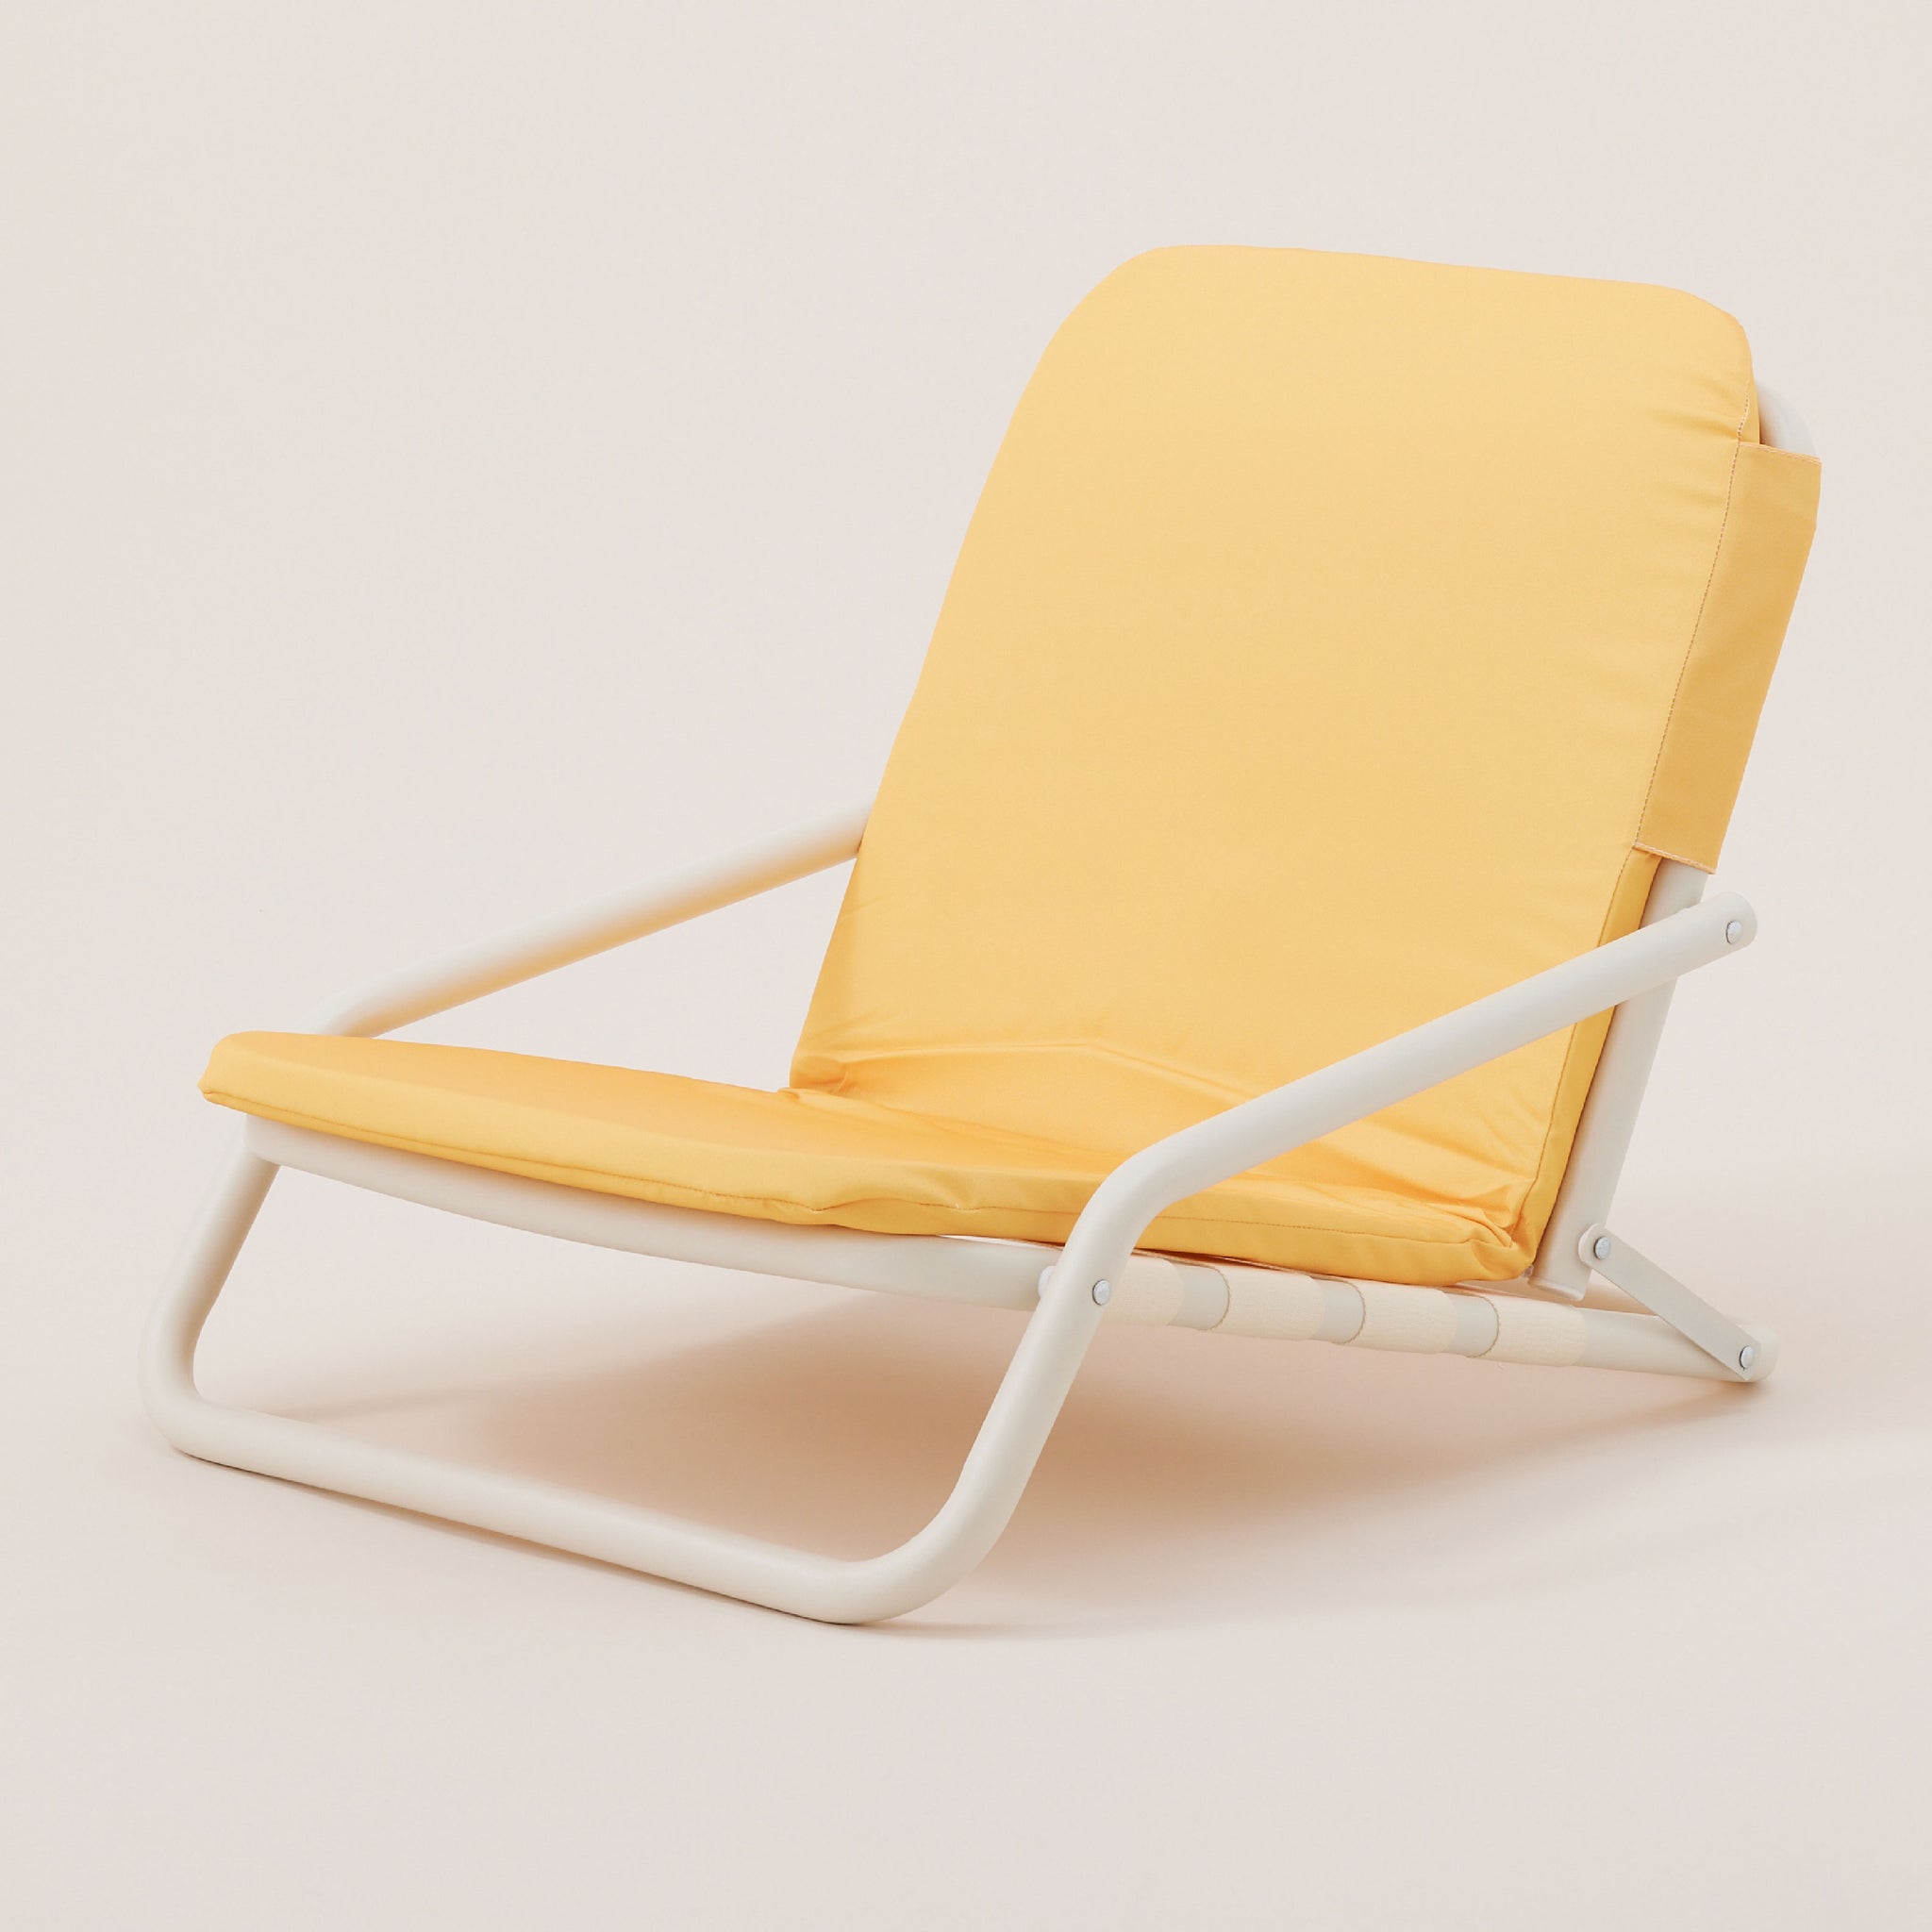 Soft Foldable Beach Chair | เก้าอี้ชายหาด พับได้